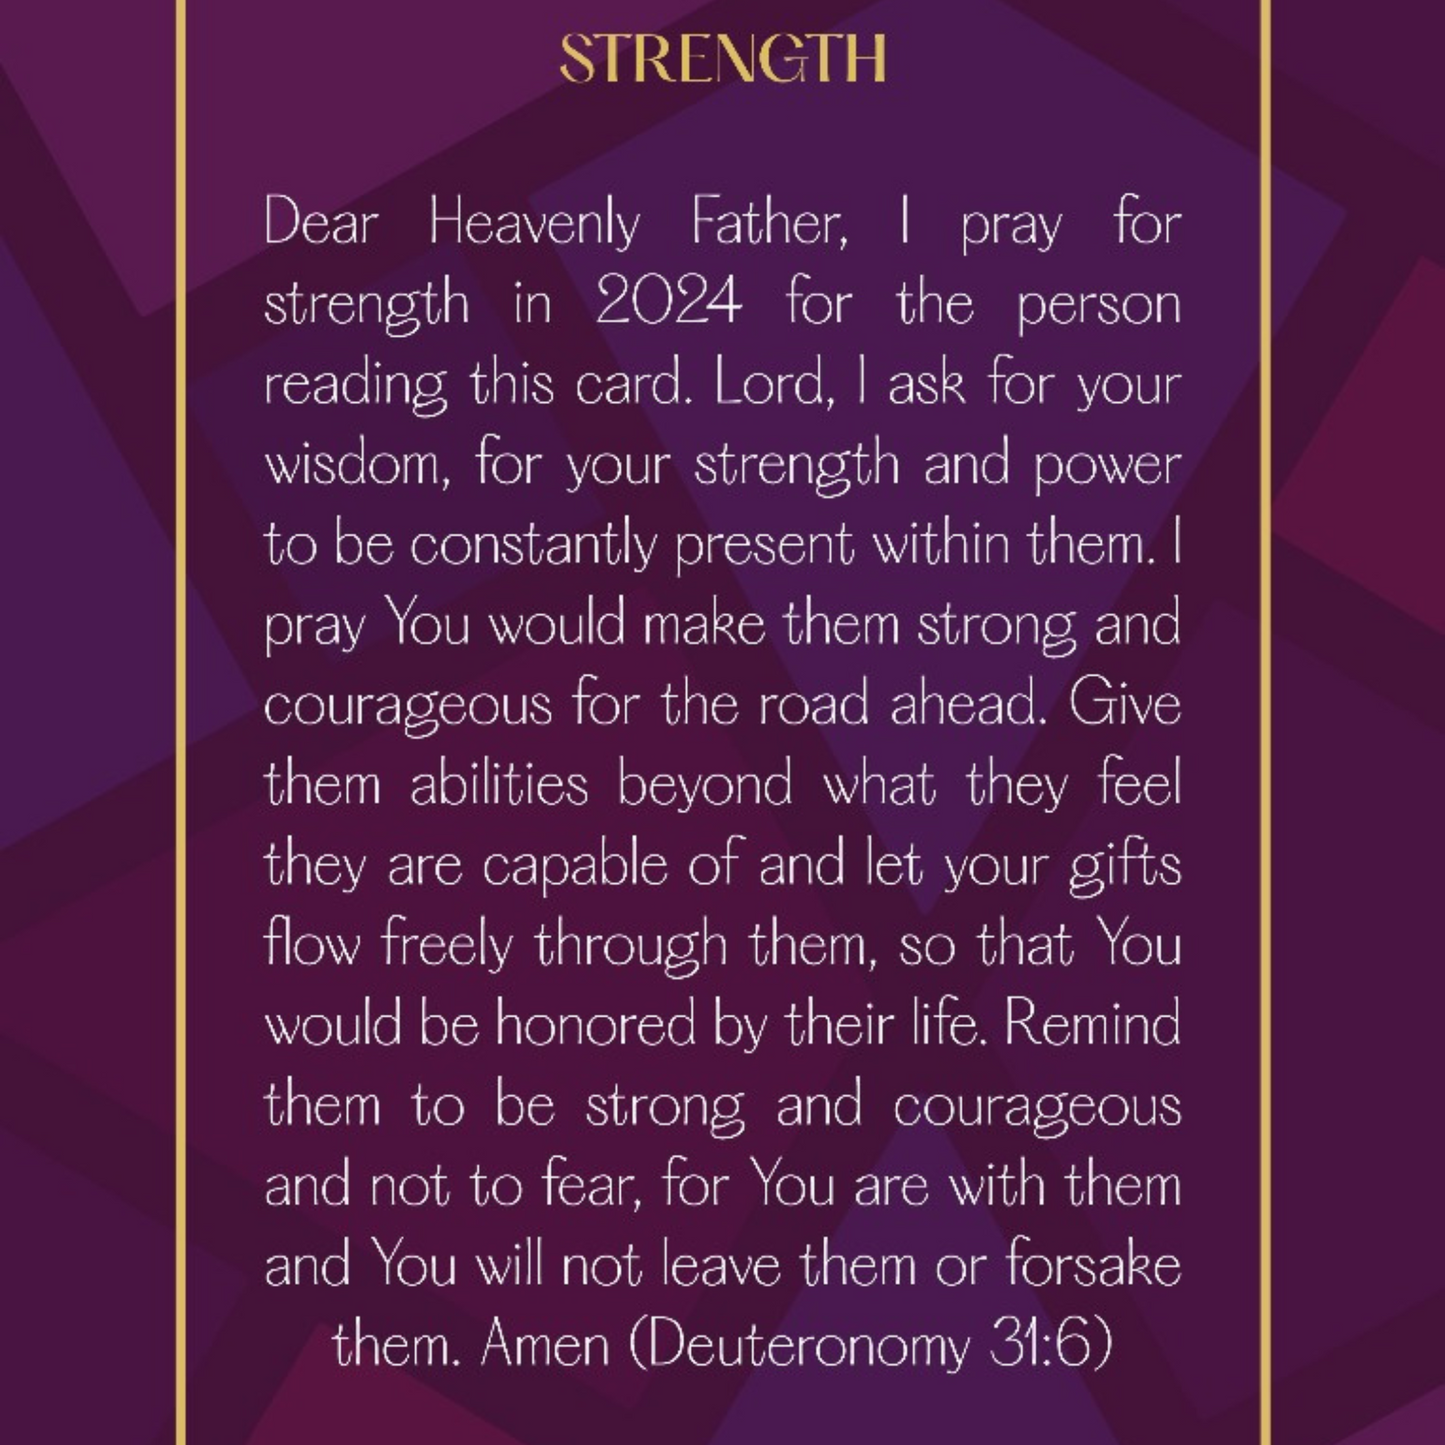 A Prayer For Strength In 2024